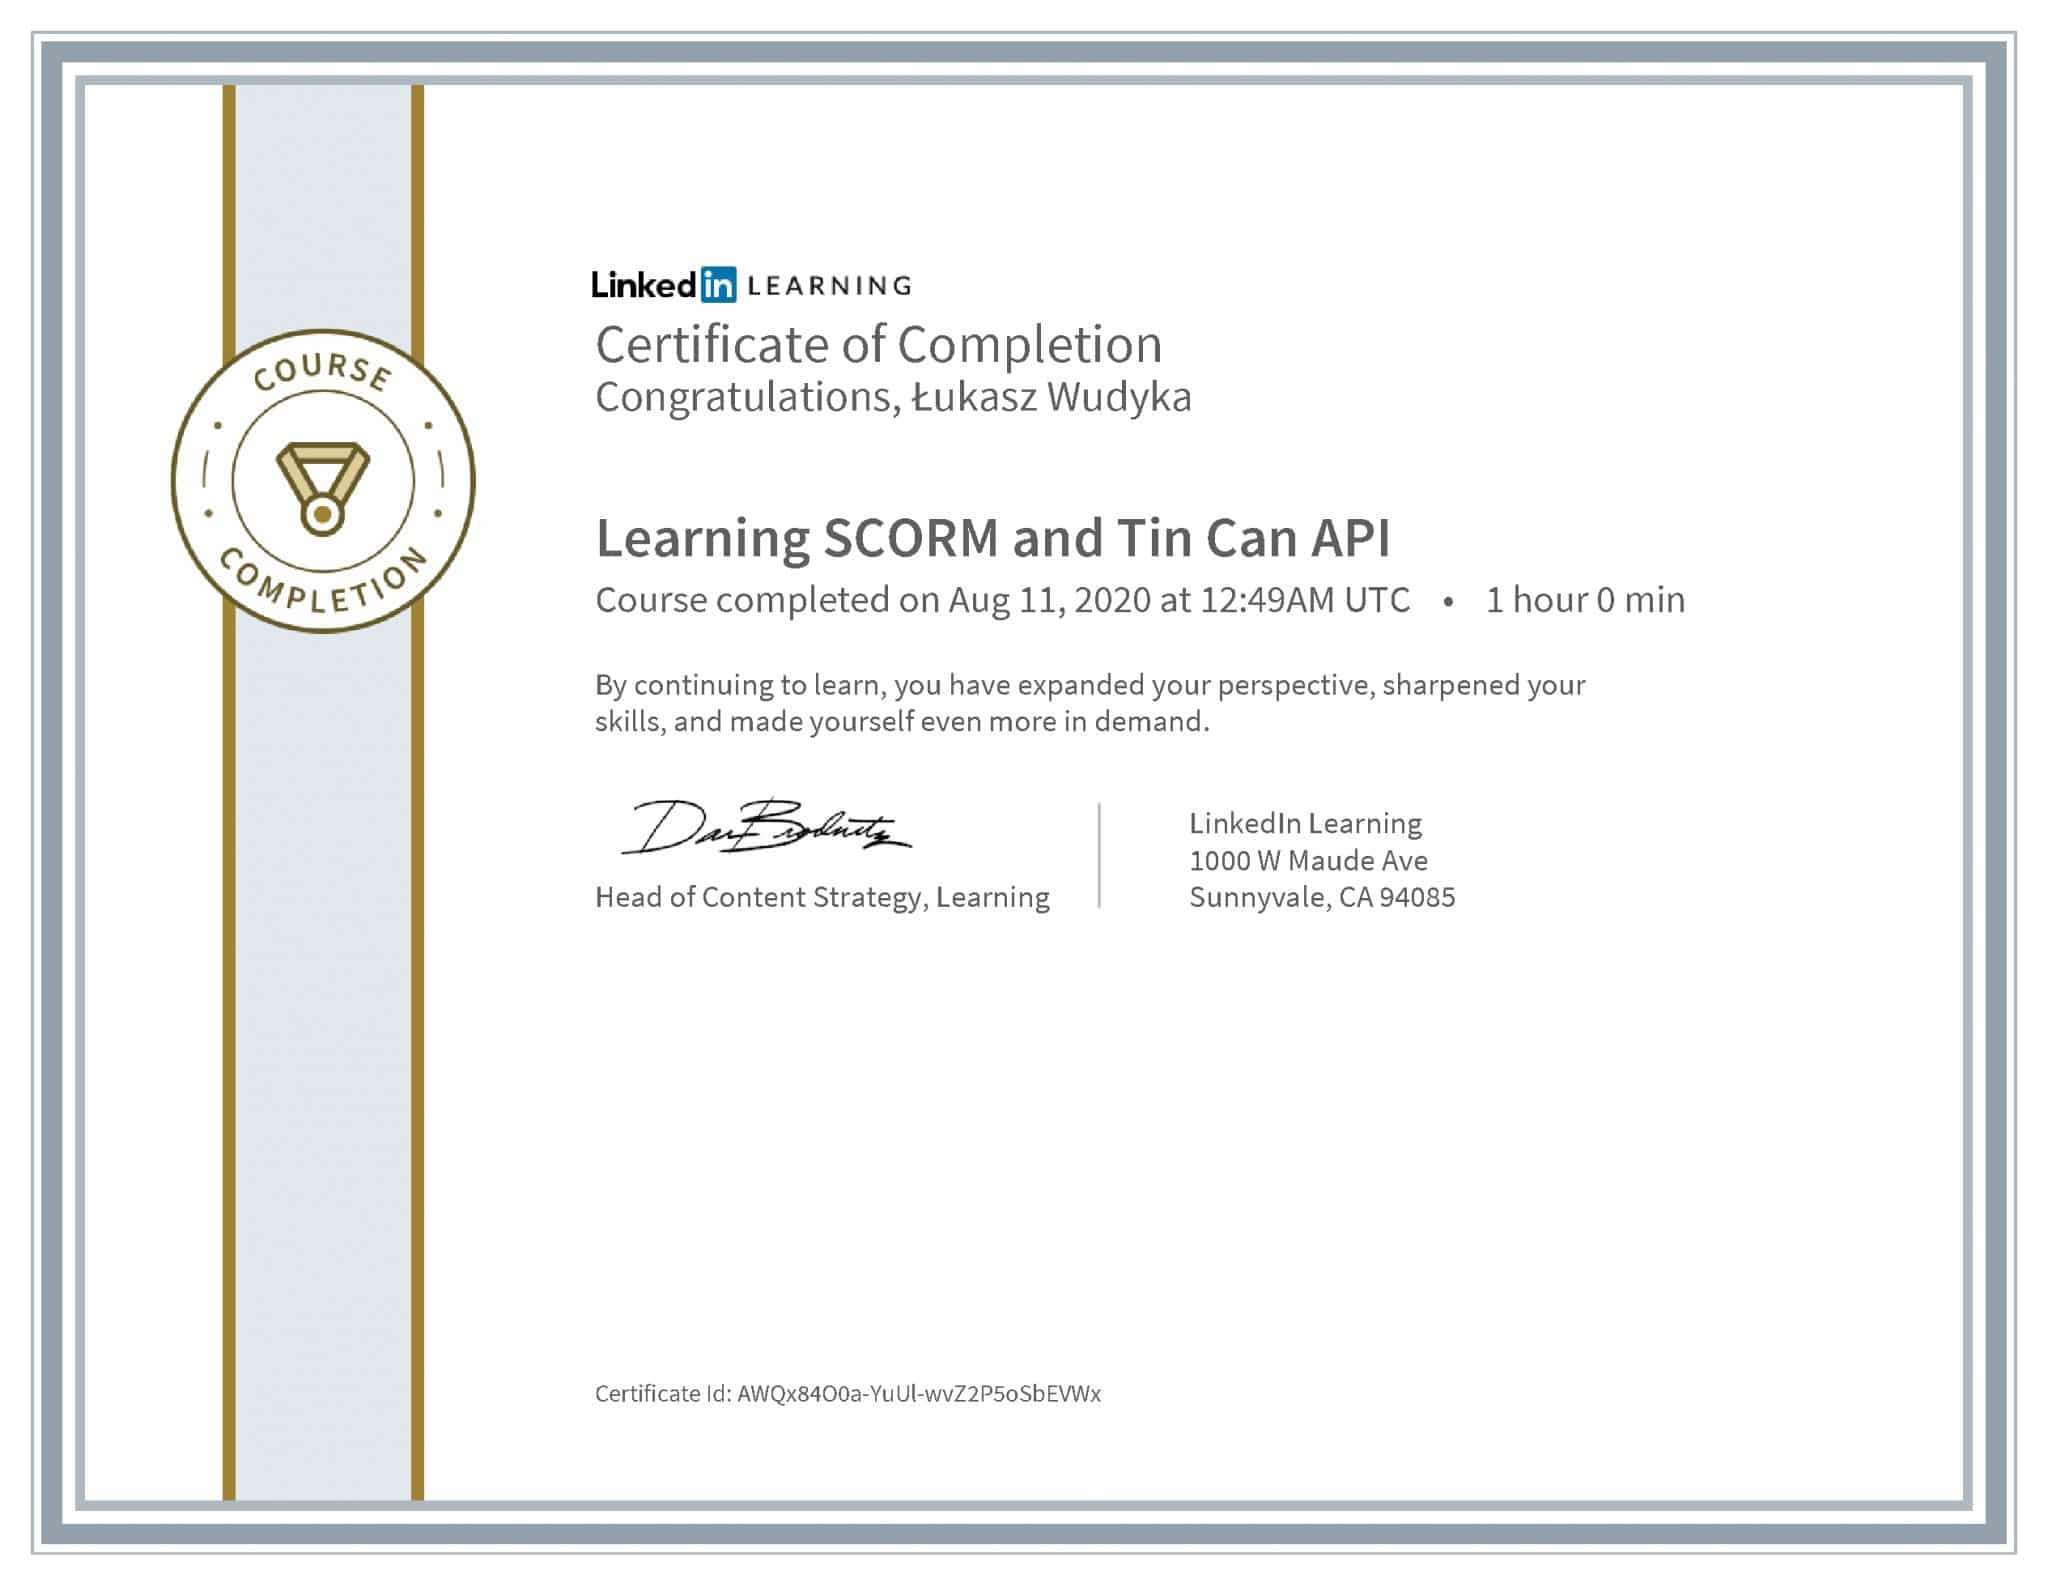 Łukasz Wudyka certyfikat LinkedIn Learning SCORM and Tin Can API